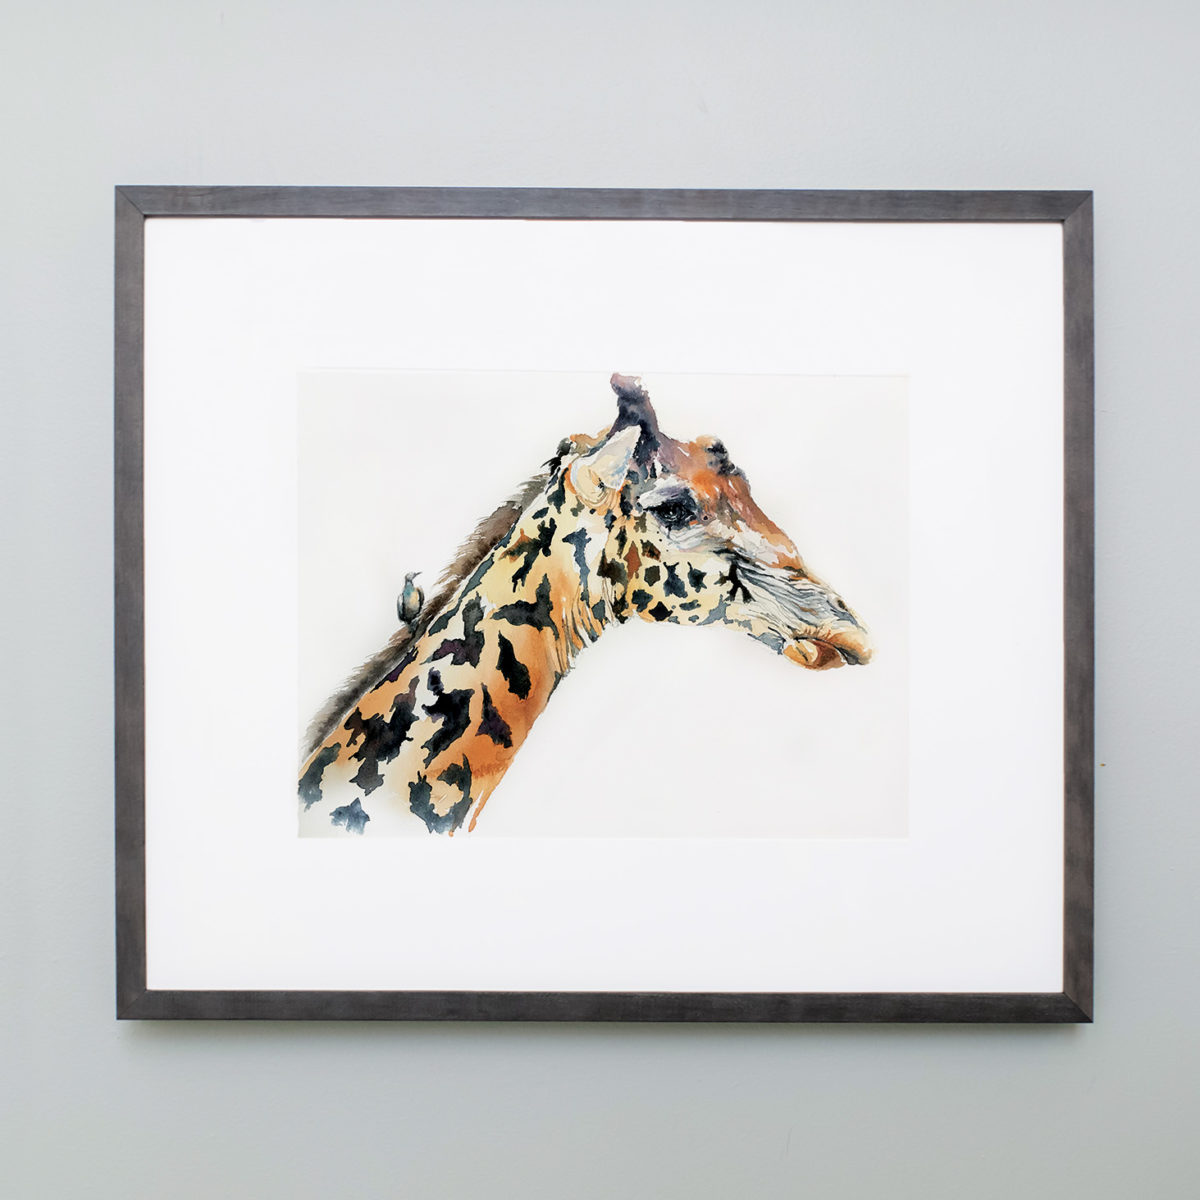 Watercolor of a giraffe framed